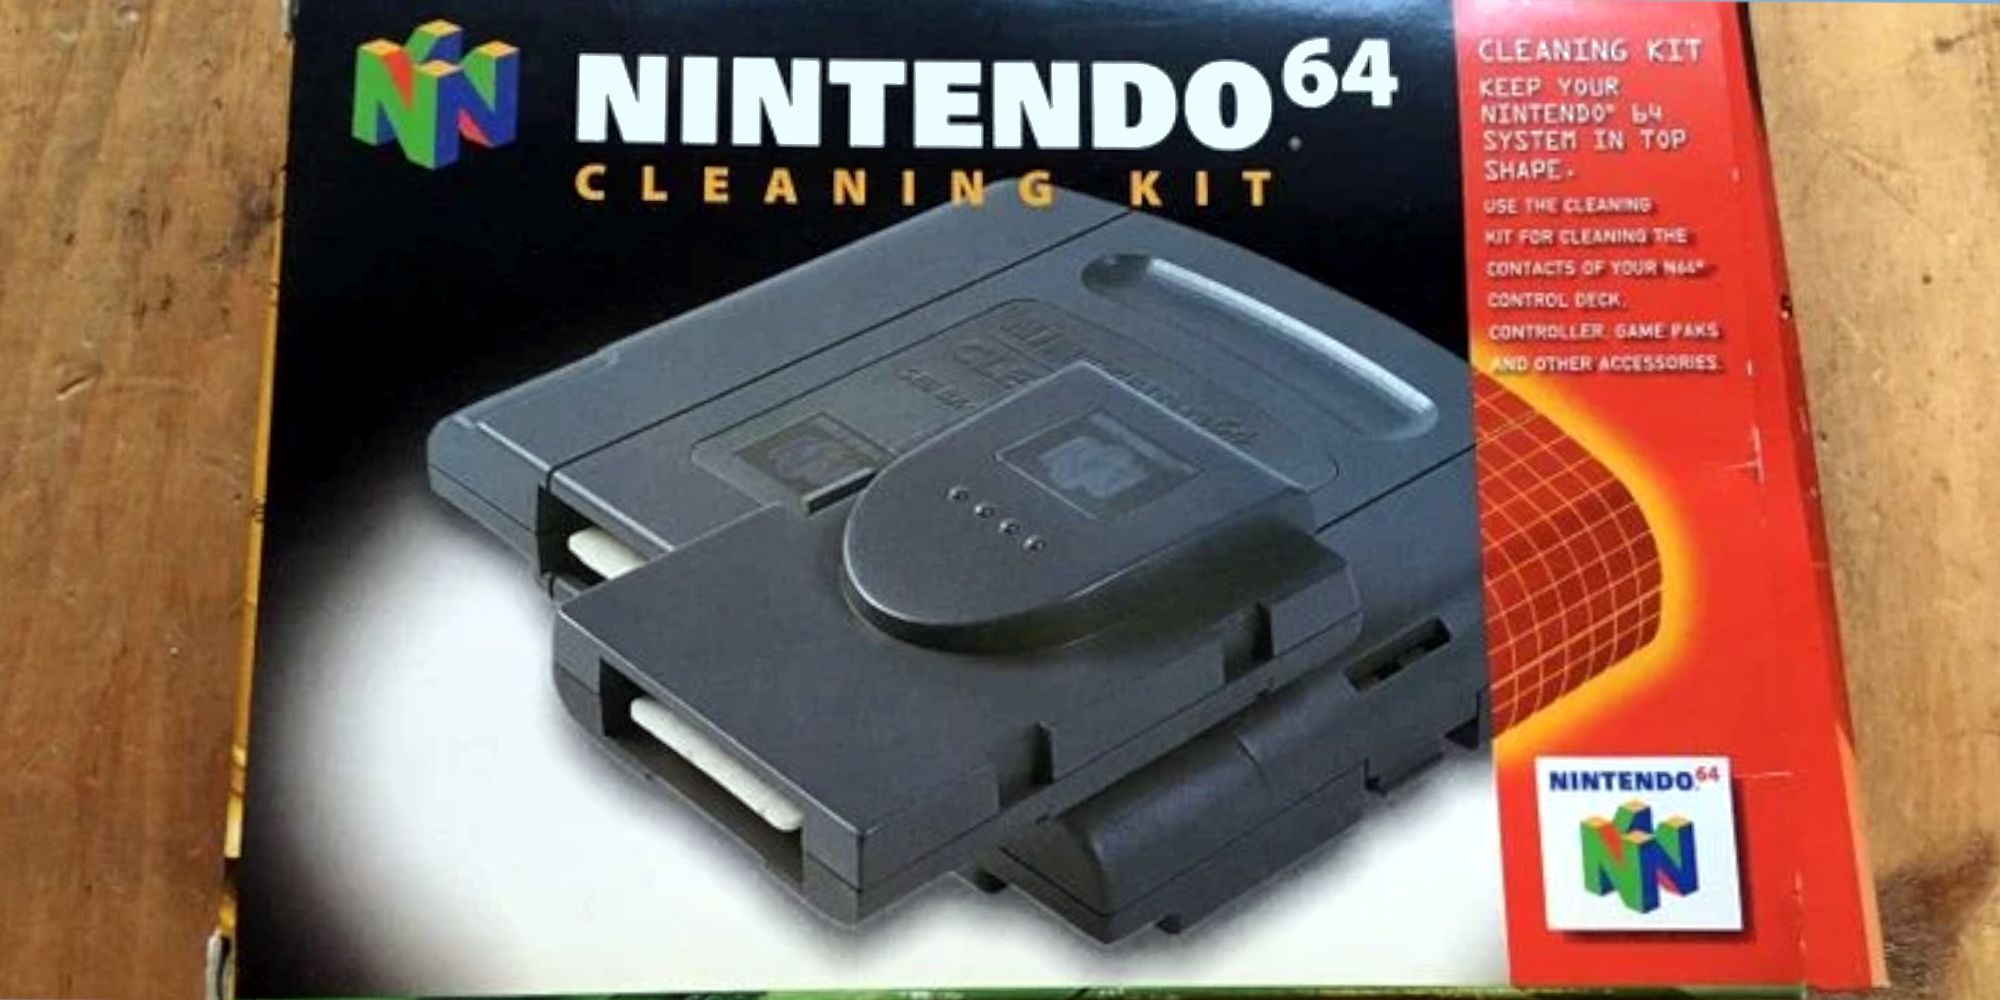 Nintendo 64 Cleaning Kit box